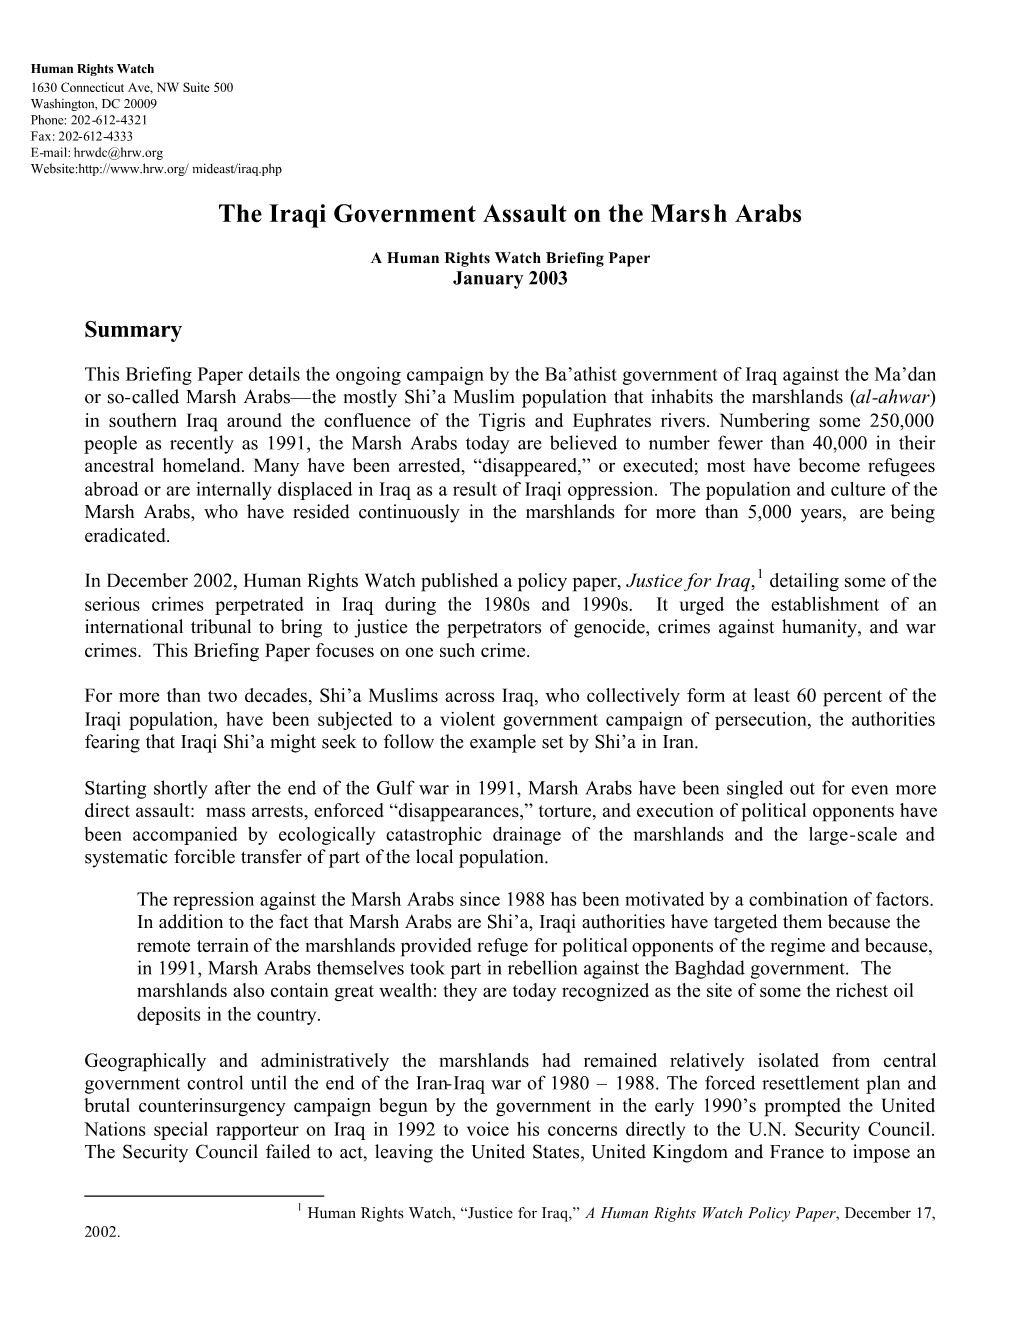 The Iraqi Government Assault on the Marsh Arabs